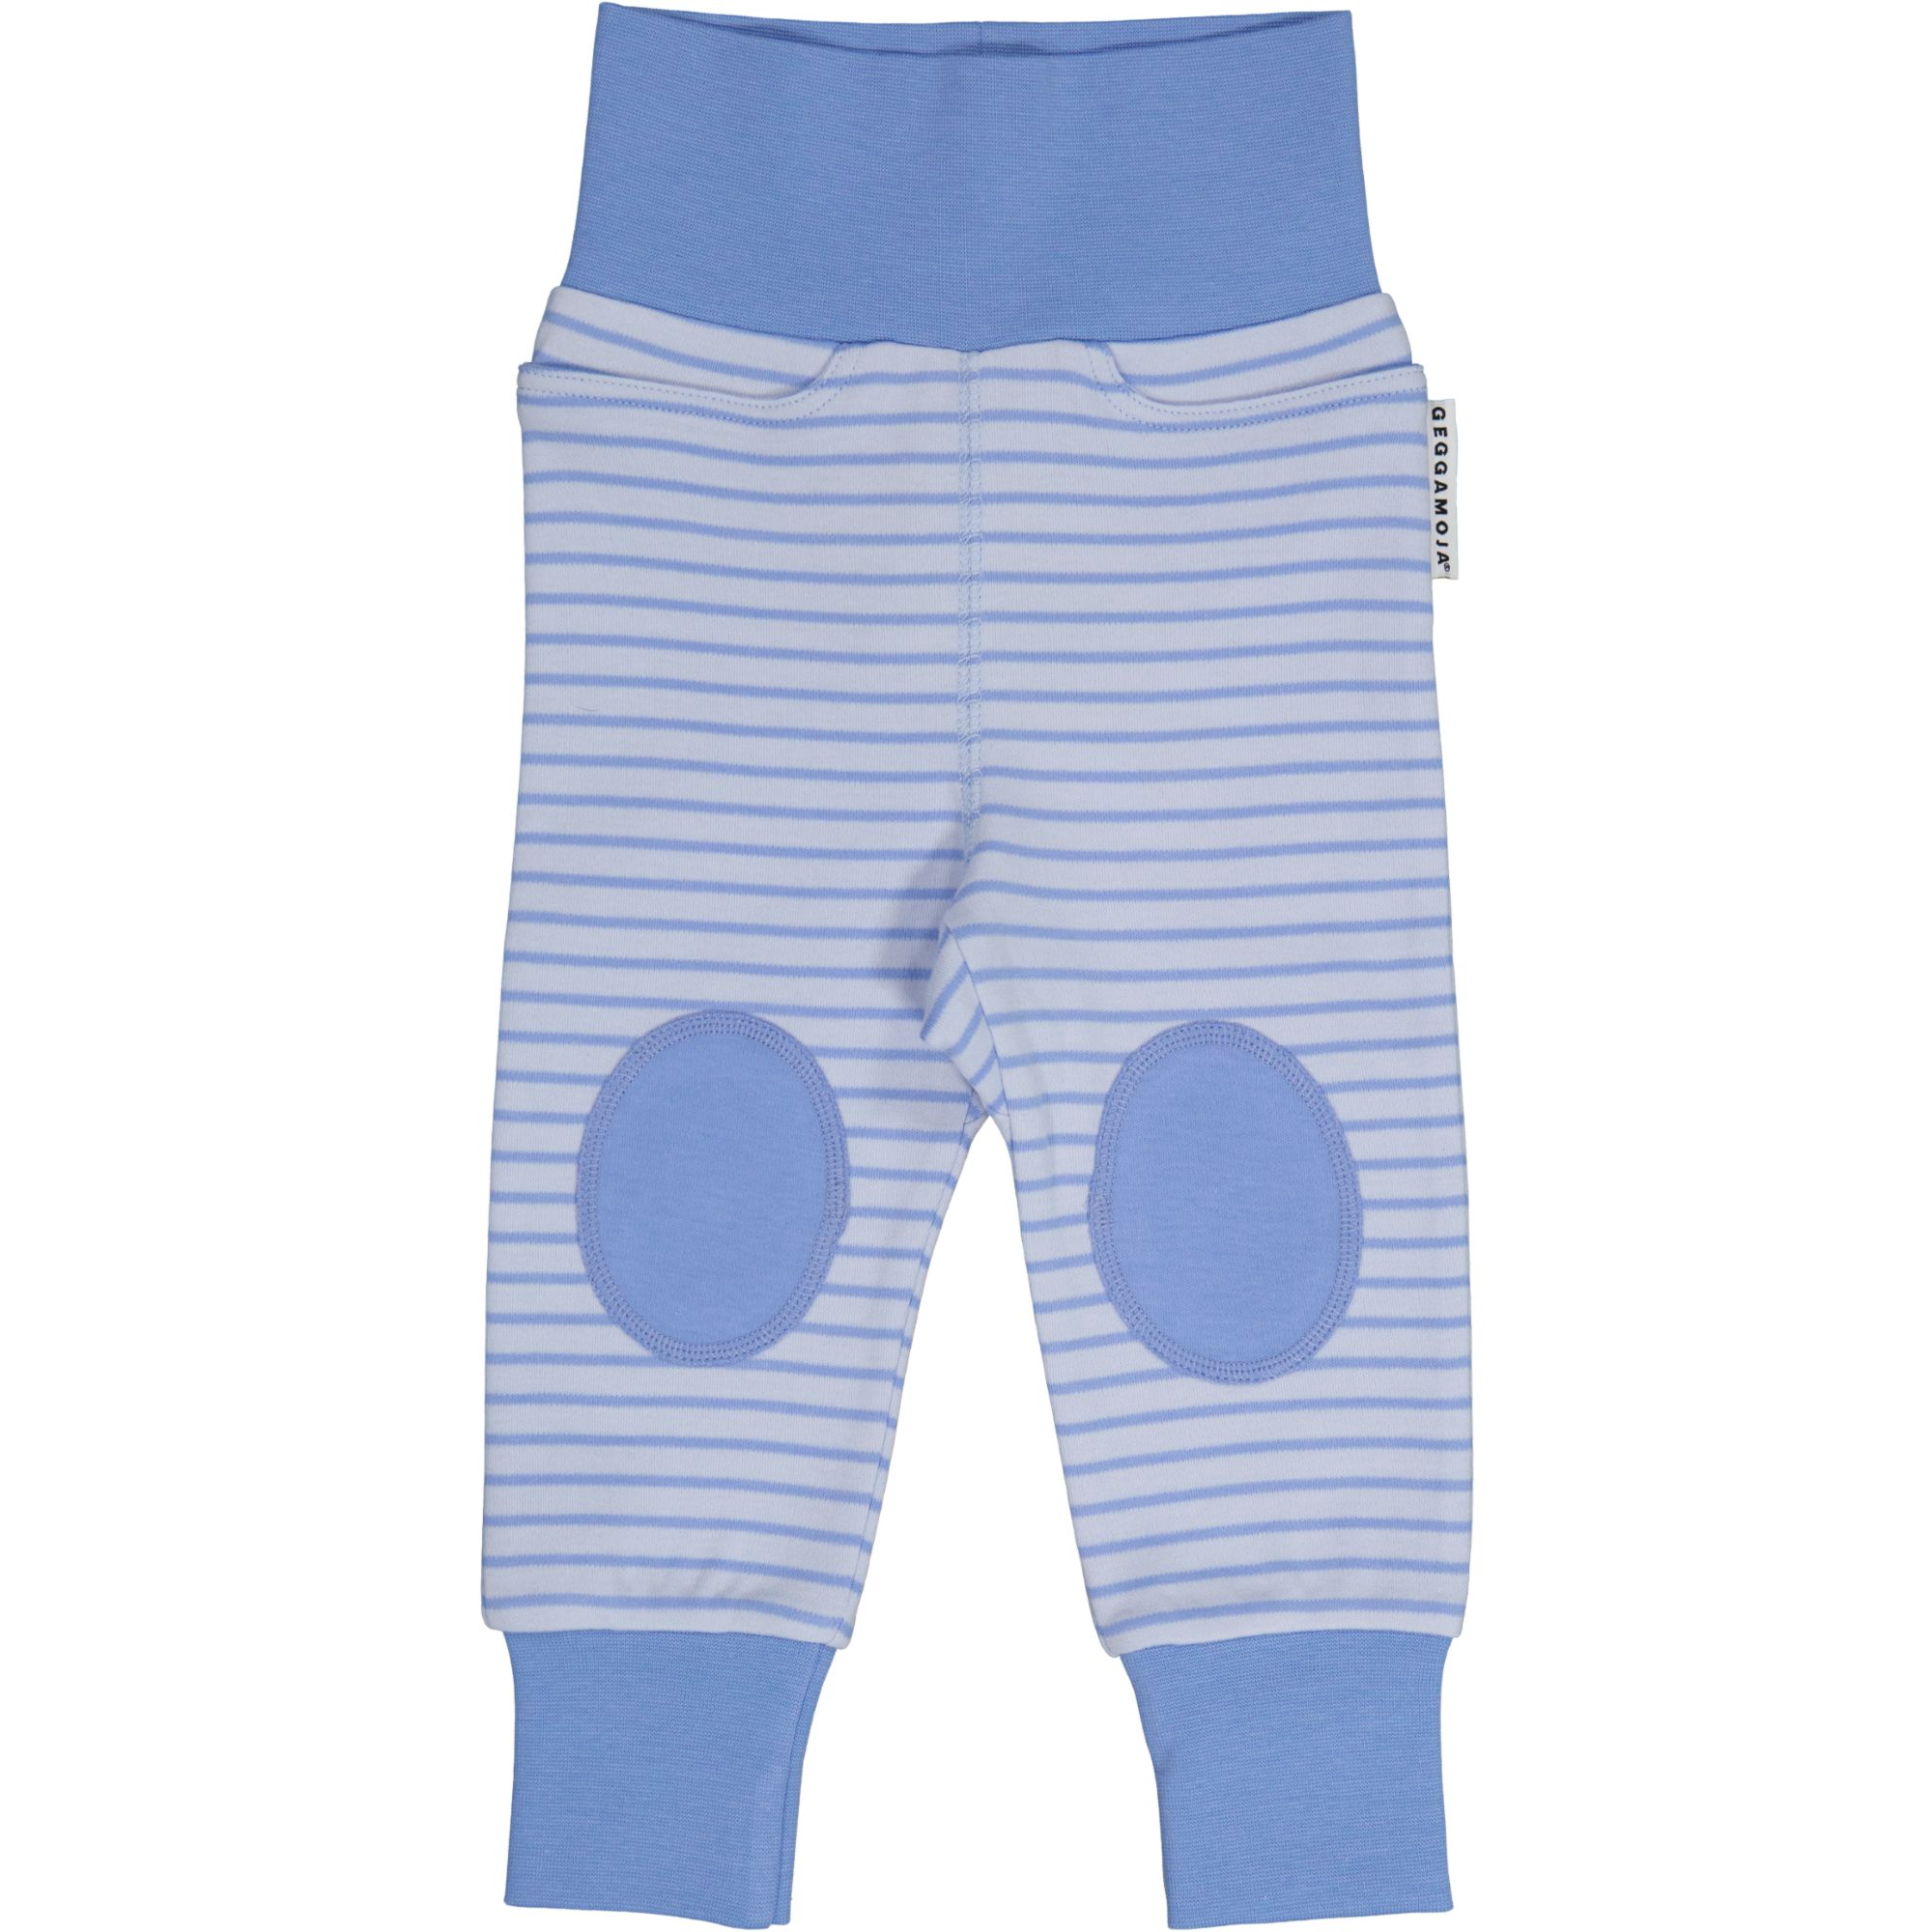 Baby pants Light blue/blue